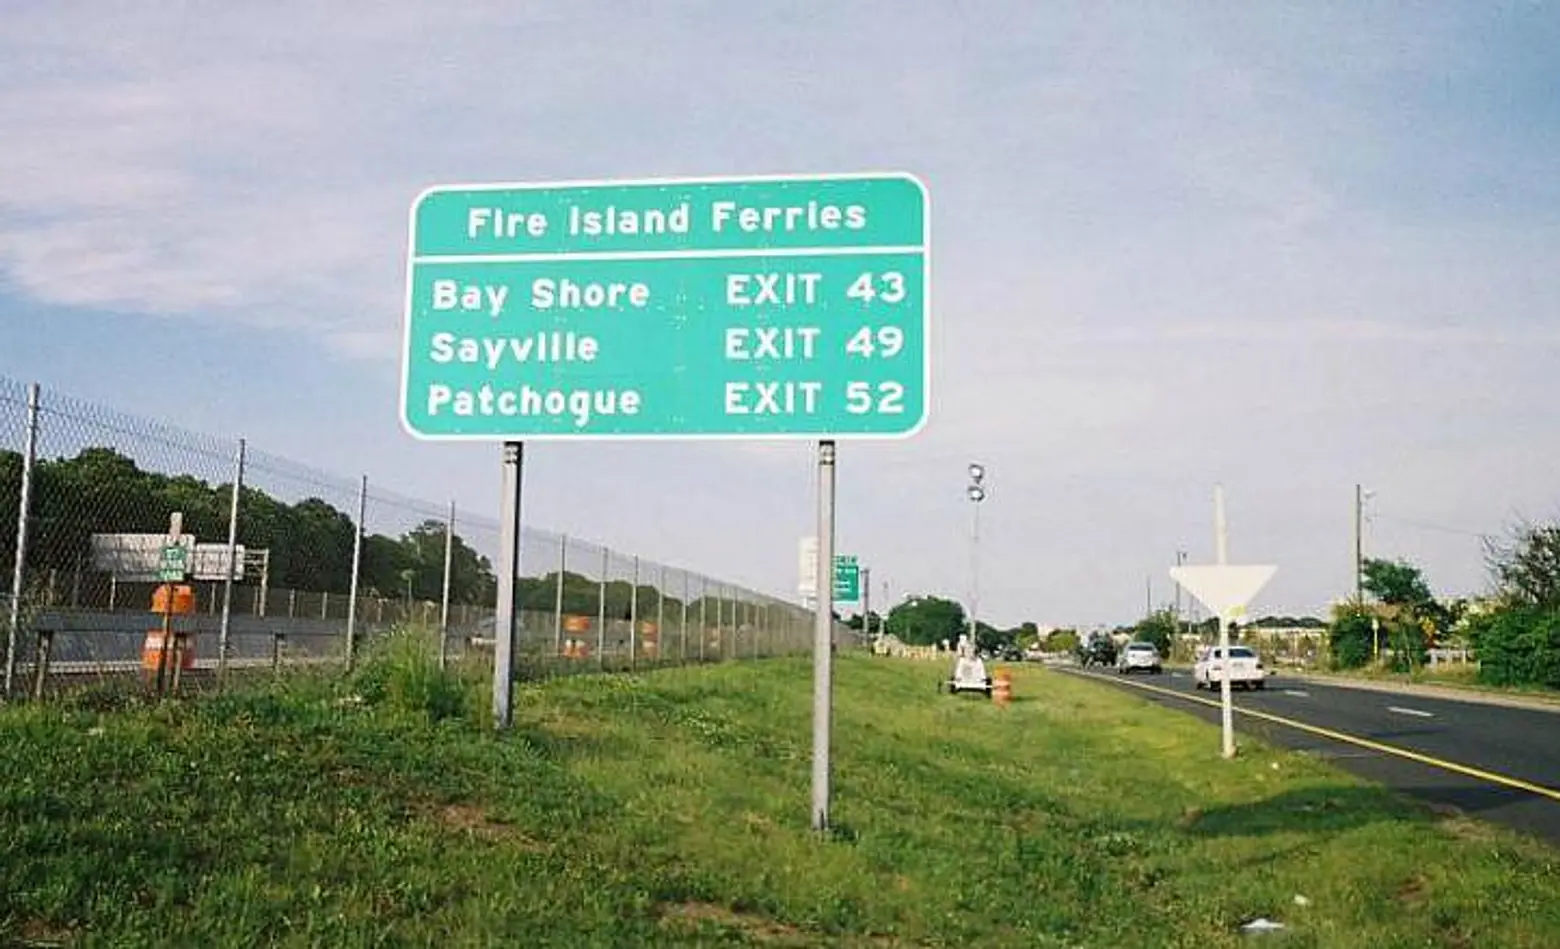 Fire Island ferries, Hamptons